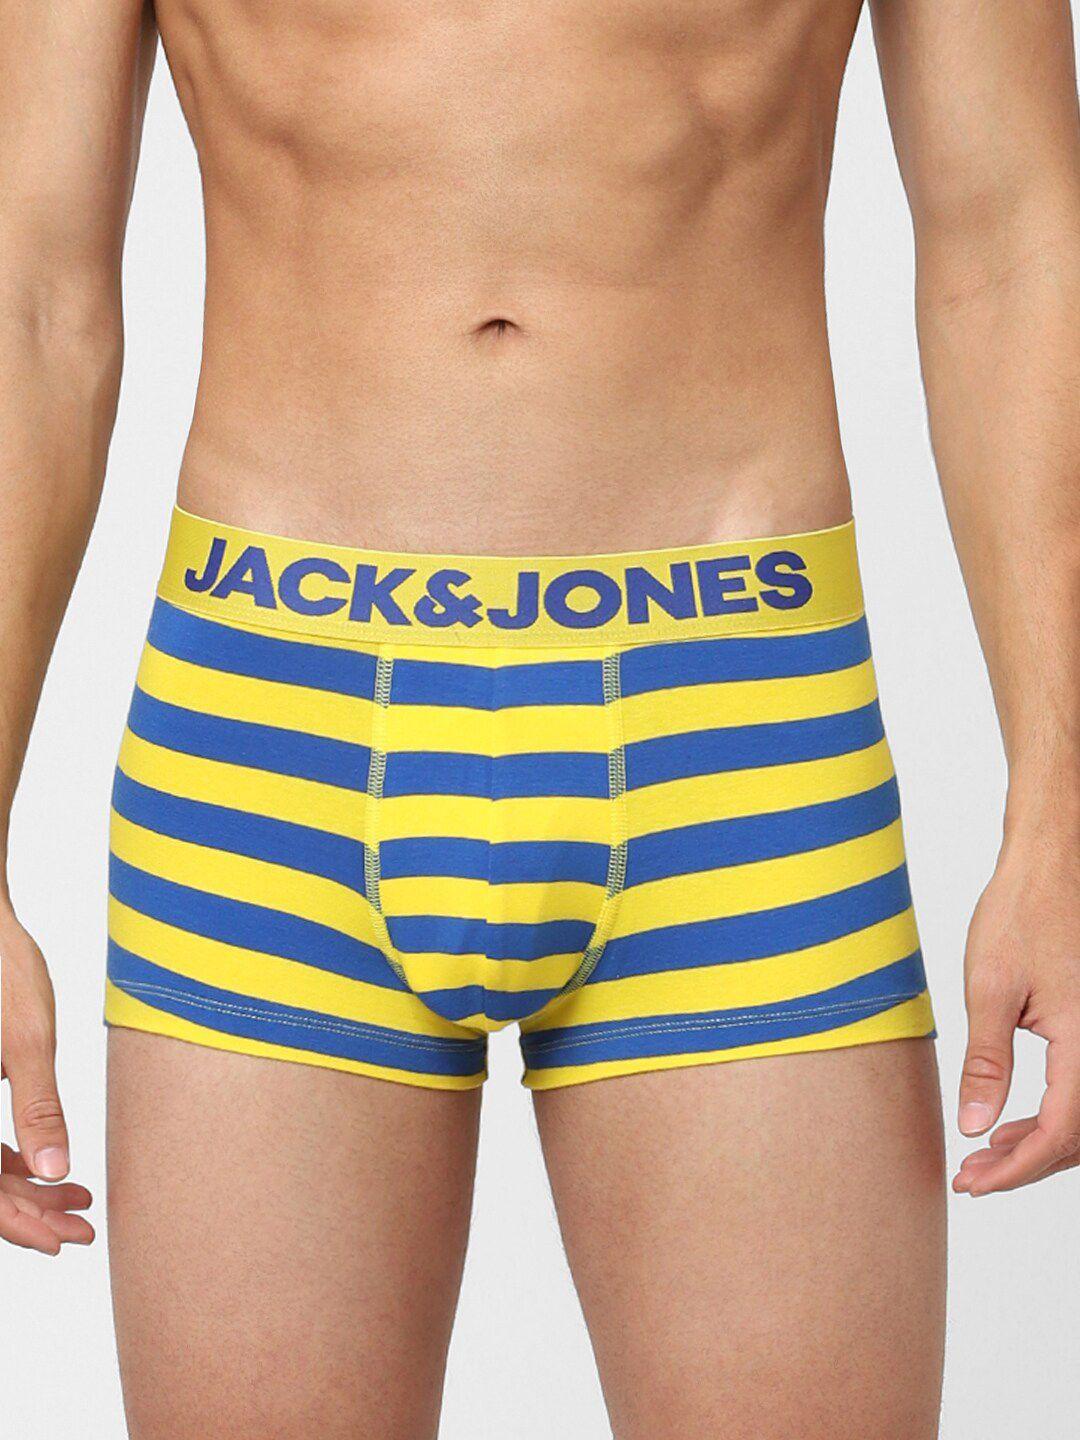 jack & jones men yellow & blue striped trunks